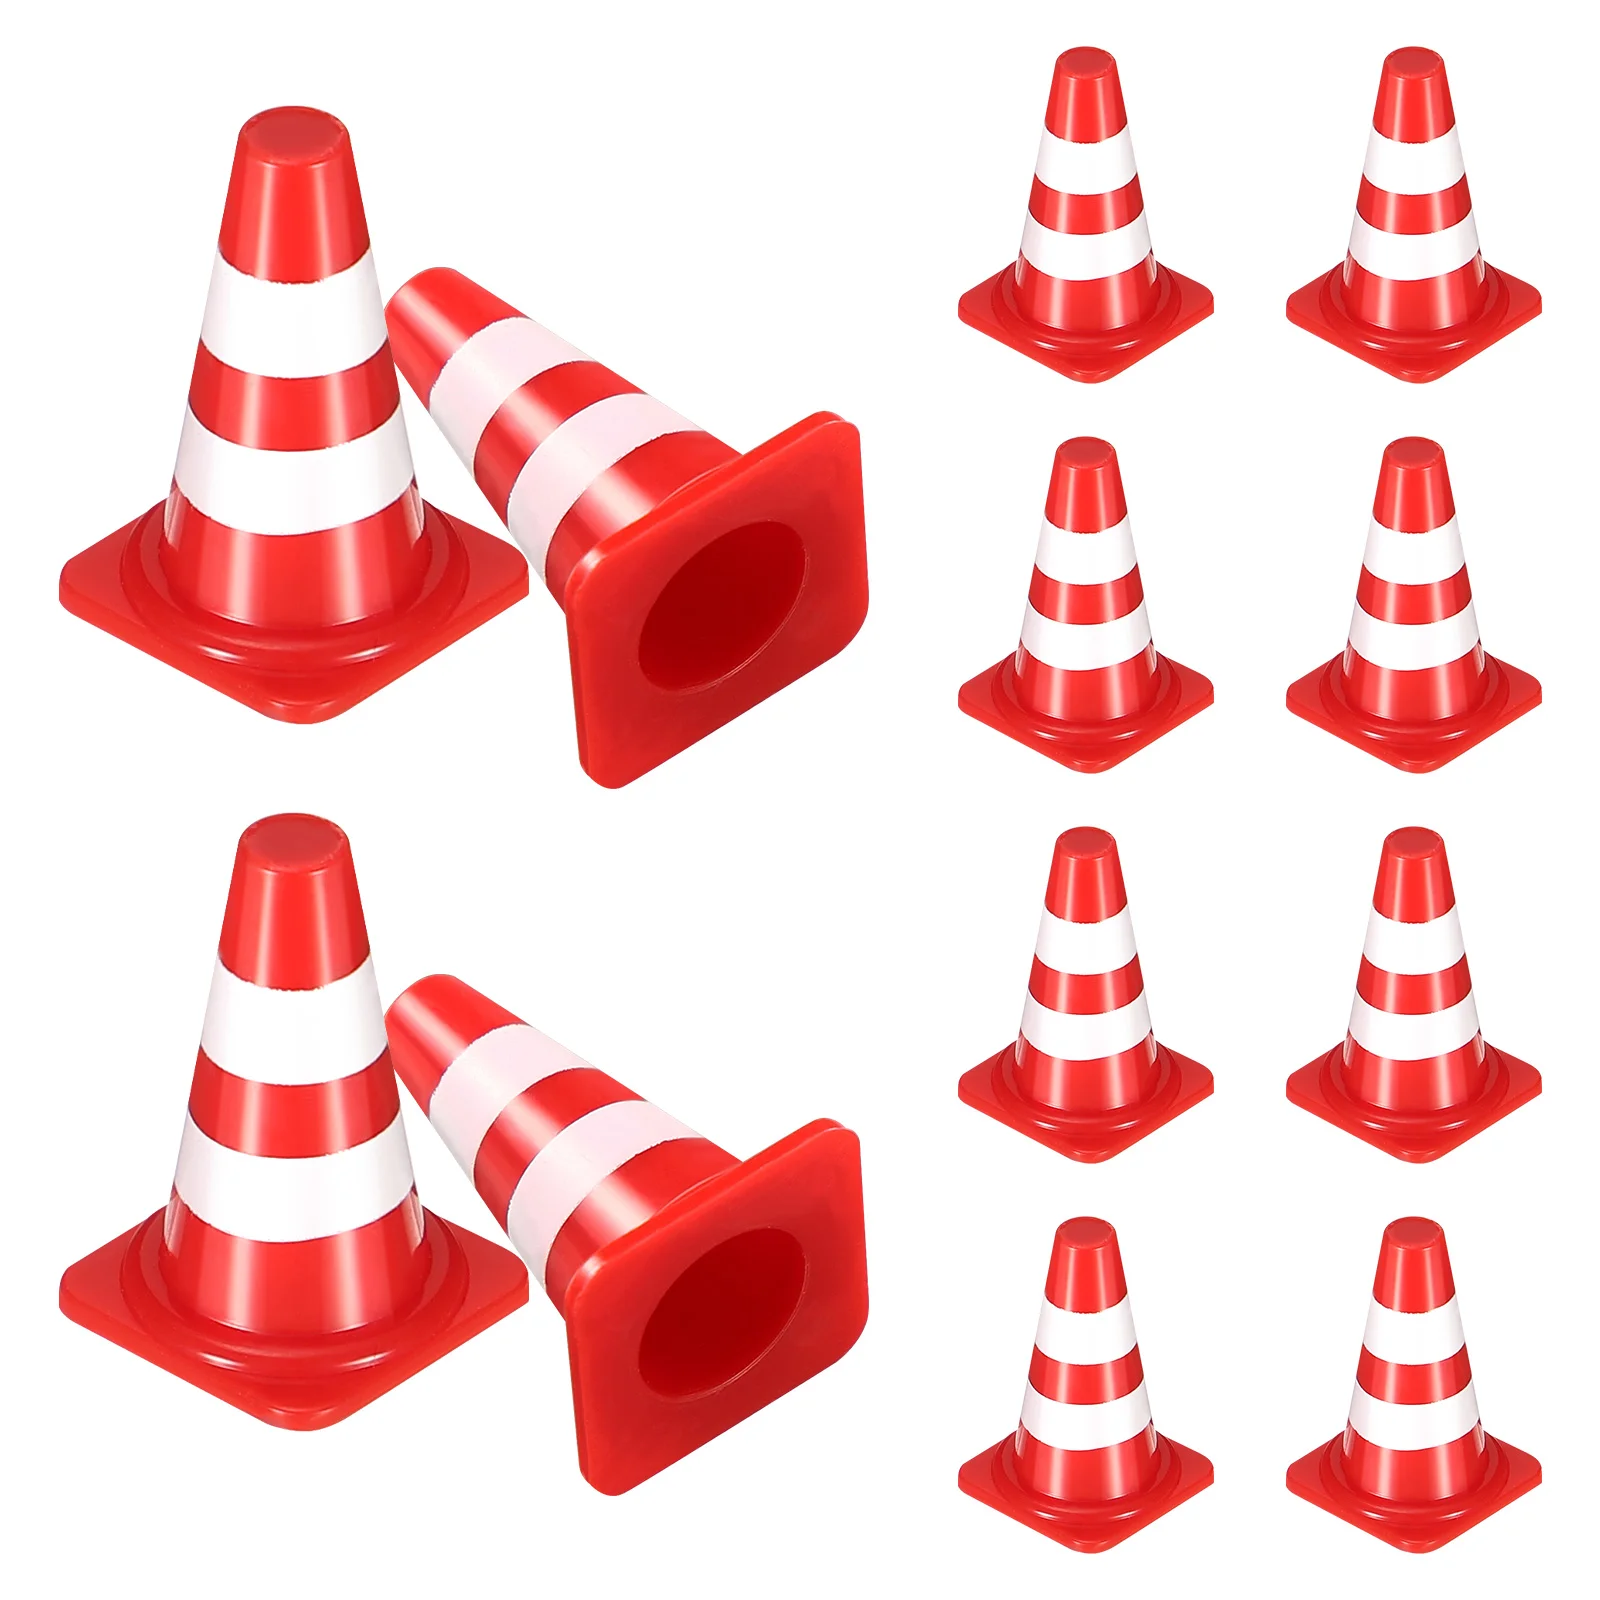 

50 Pcs Roadblock Simulation Props Miniature Traffic Cones Childrens Toys Safety Children’s